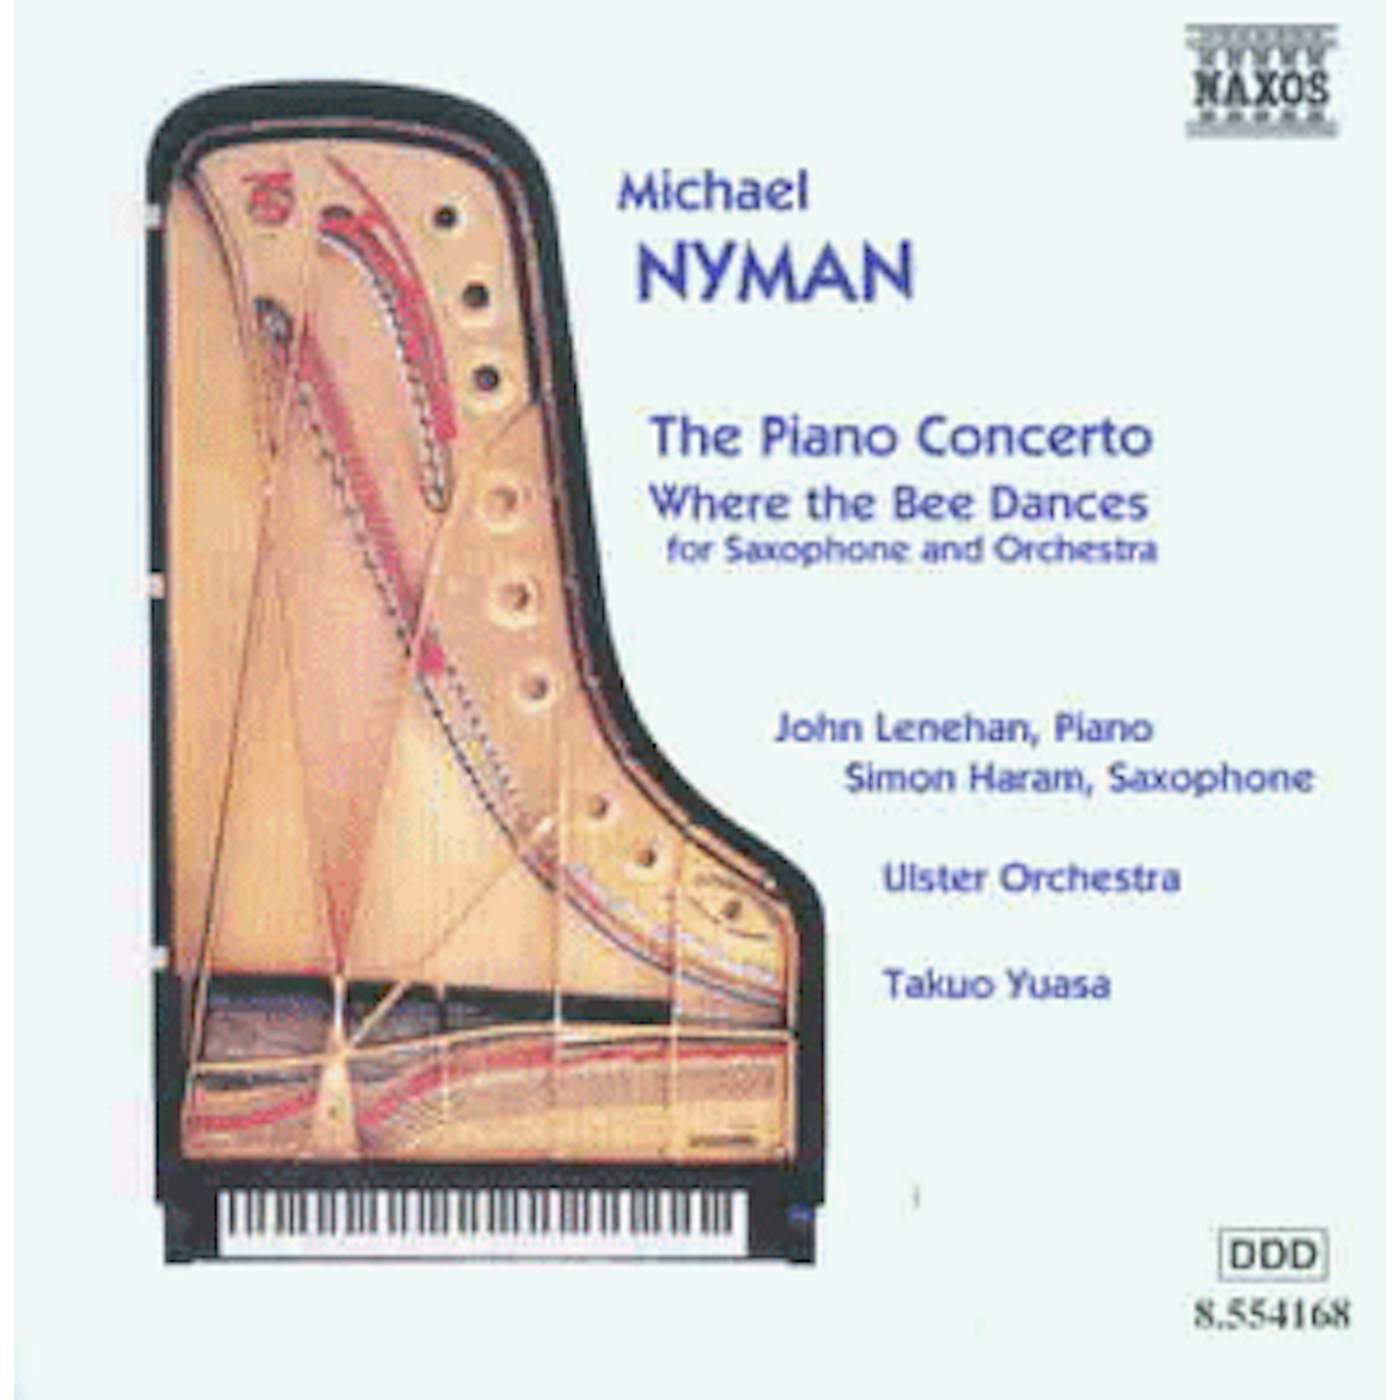 Michael Nyman PIANO CONCERTO / WHERE THE BEE DANCES CD